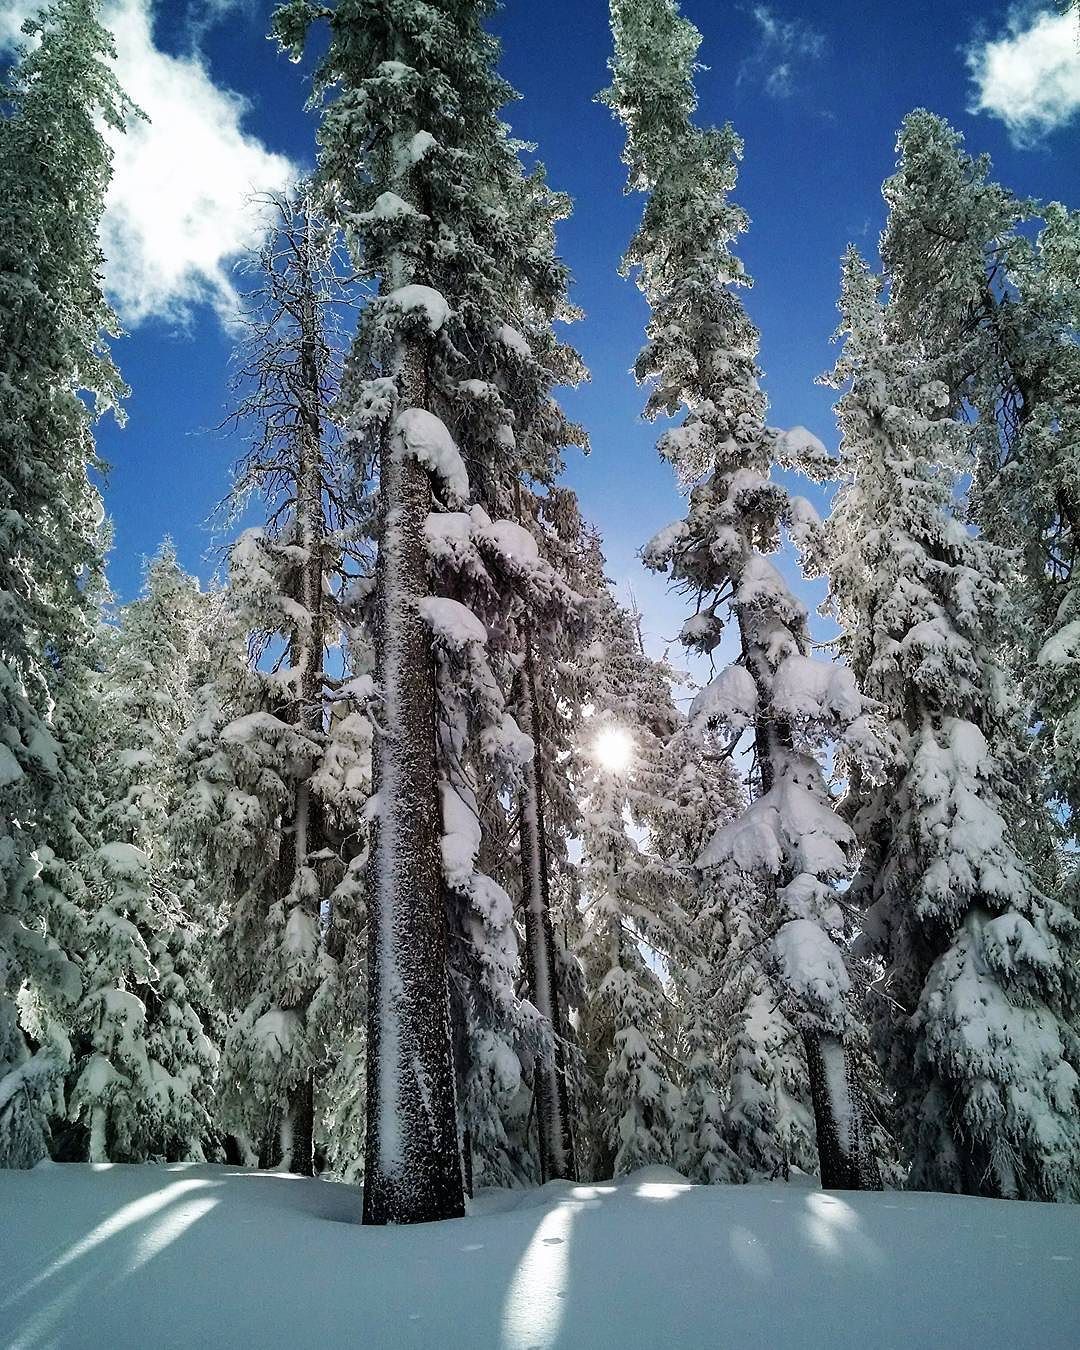 Snowy pine trees in Blue Sky Basin in Vail, Colorado taken by Instagram user @thatkasper on a sunny day.